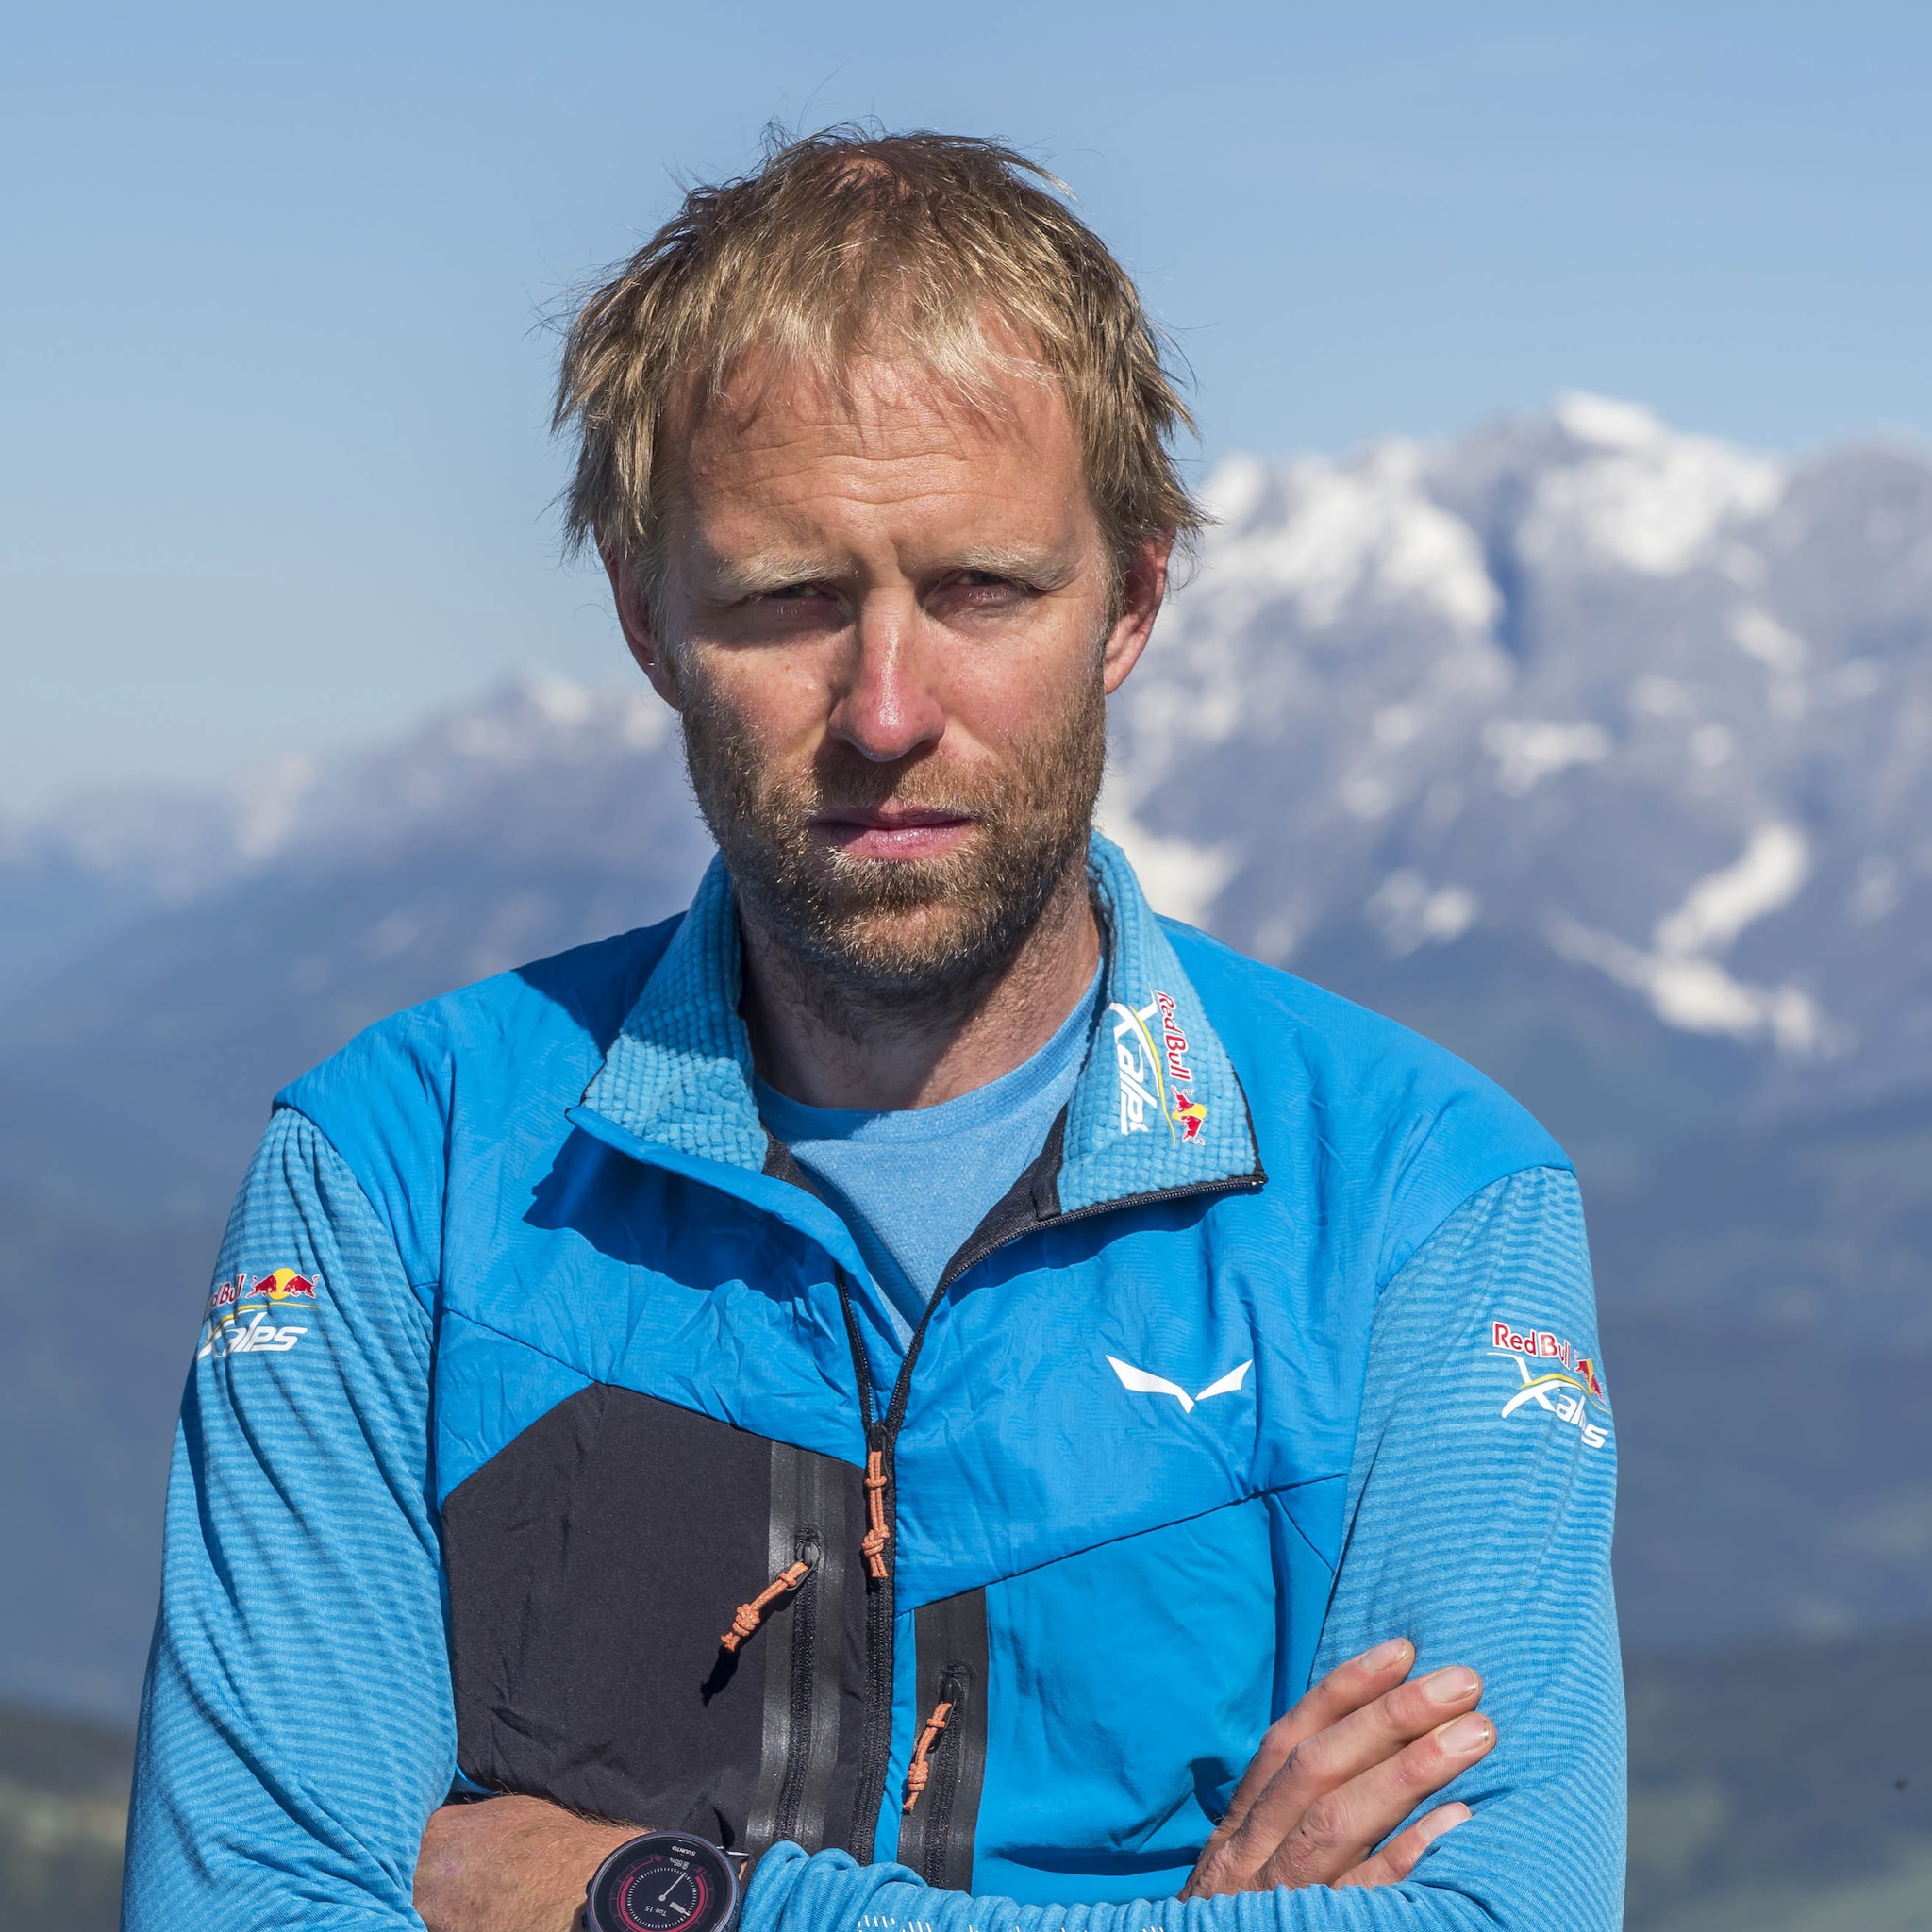 Ferdinand van Schelven (NED) poses for portrait during Red Bull X-Alps 2021 preparations in Wagrain, Austria on August 15, 2021